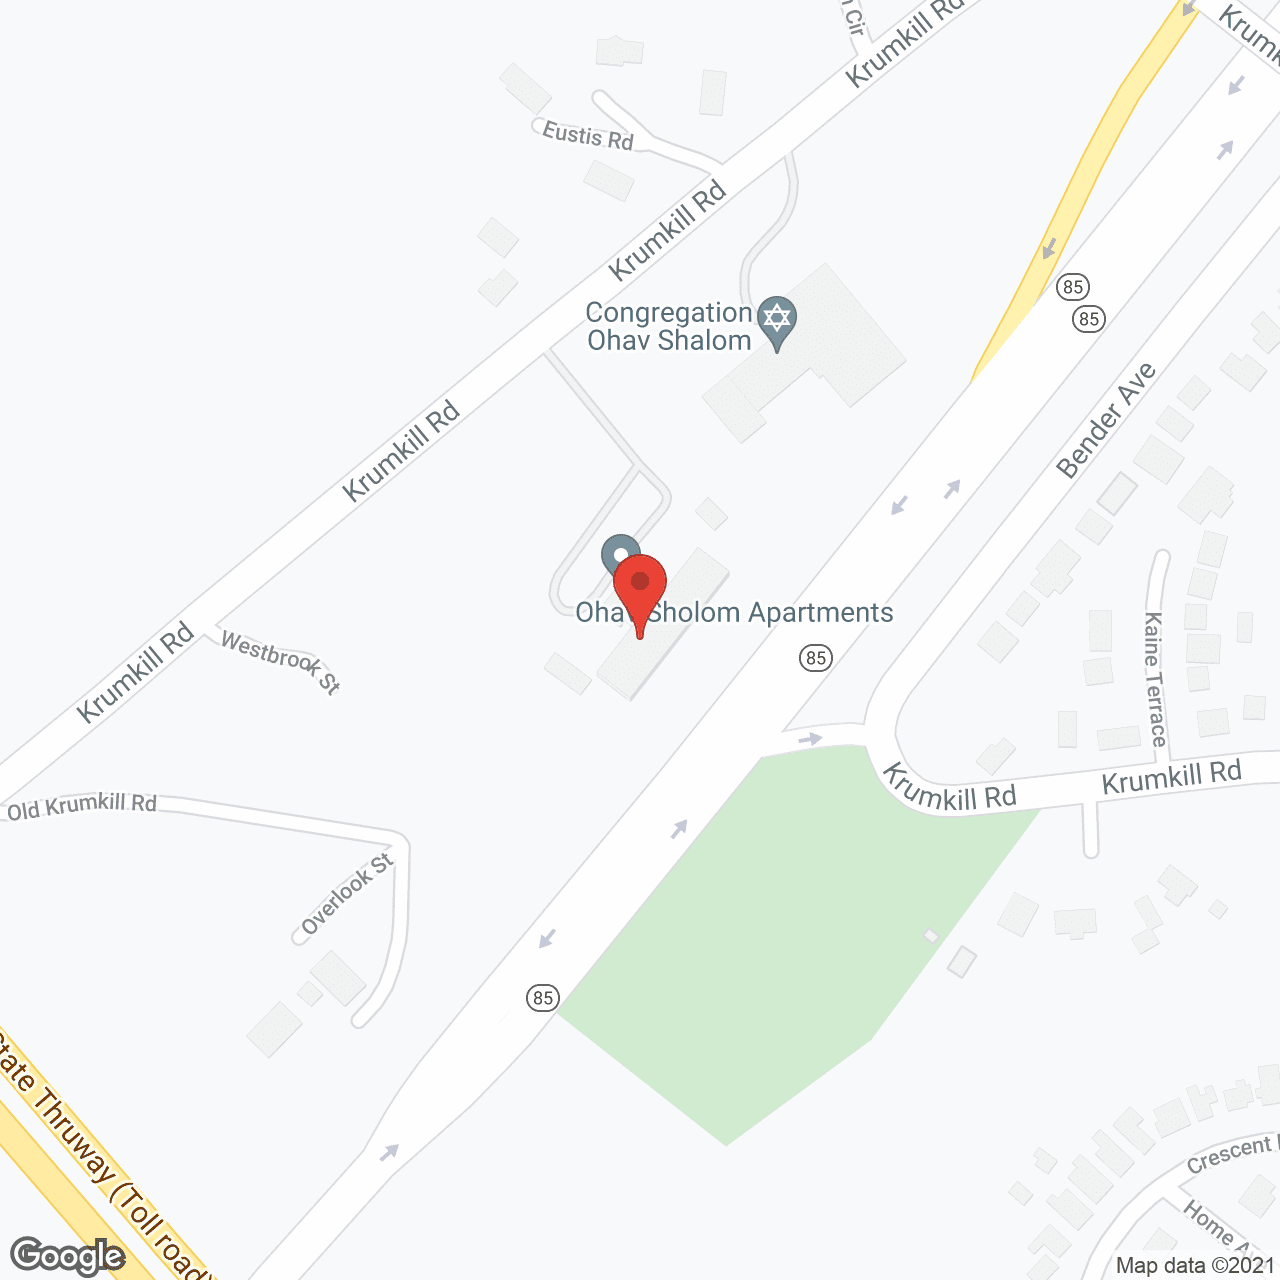 Ohau Sholom Apartments in google map